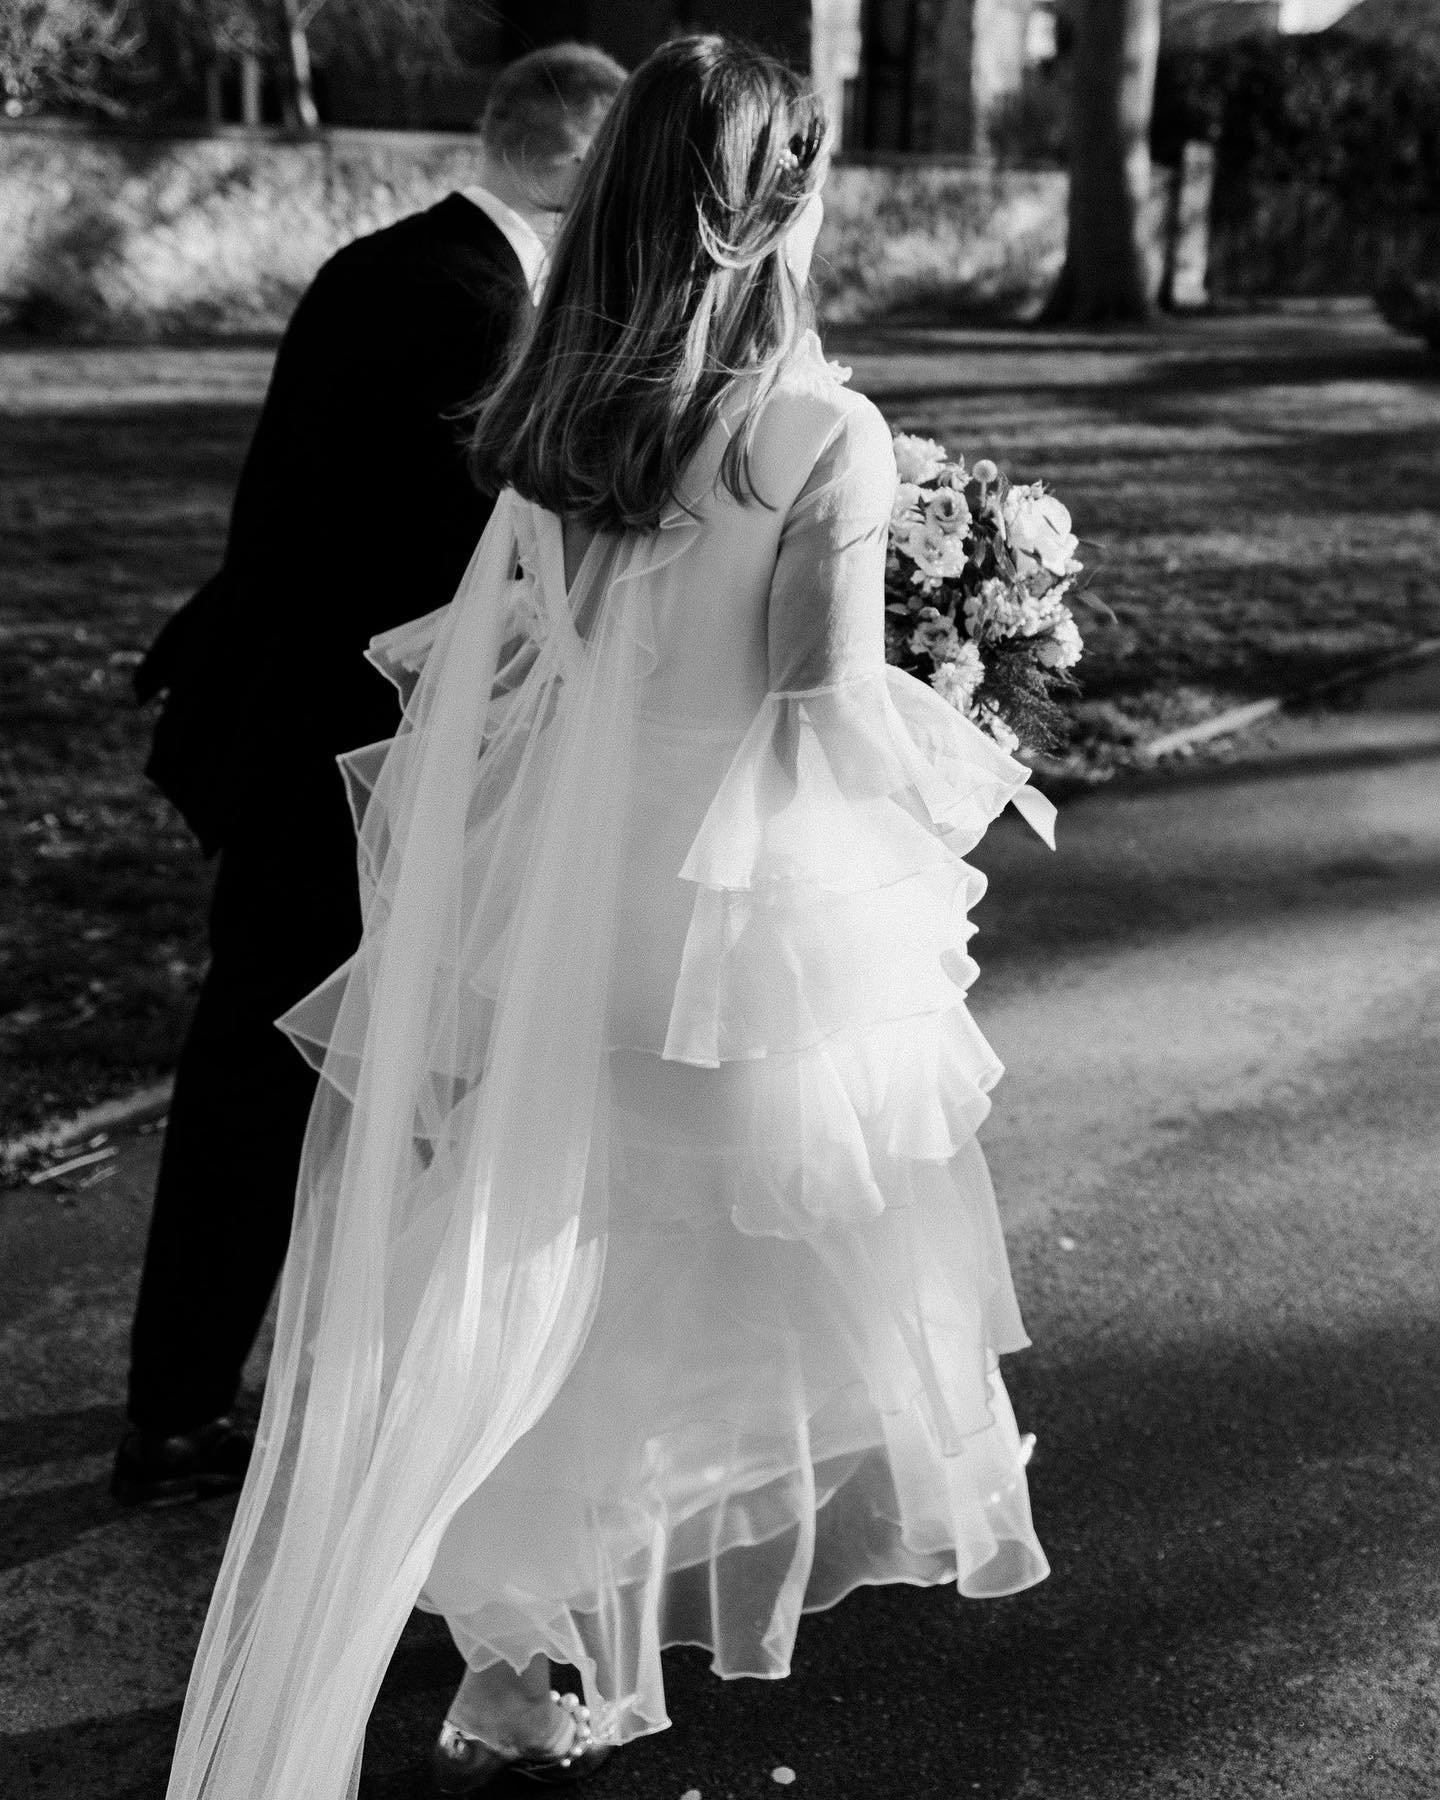 It&rsquo;s a walk in the park when you choose a Kindling gown🕊️ 

Kindling Real Bride Emily &amp; Matthew 

Photo @dandjweddingphotography 

#realbride #lyellown #modernbride #londonbride #londonwedding #hackneytownhall #modernweddingdress #custombr